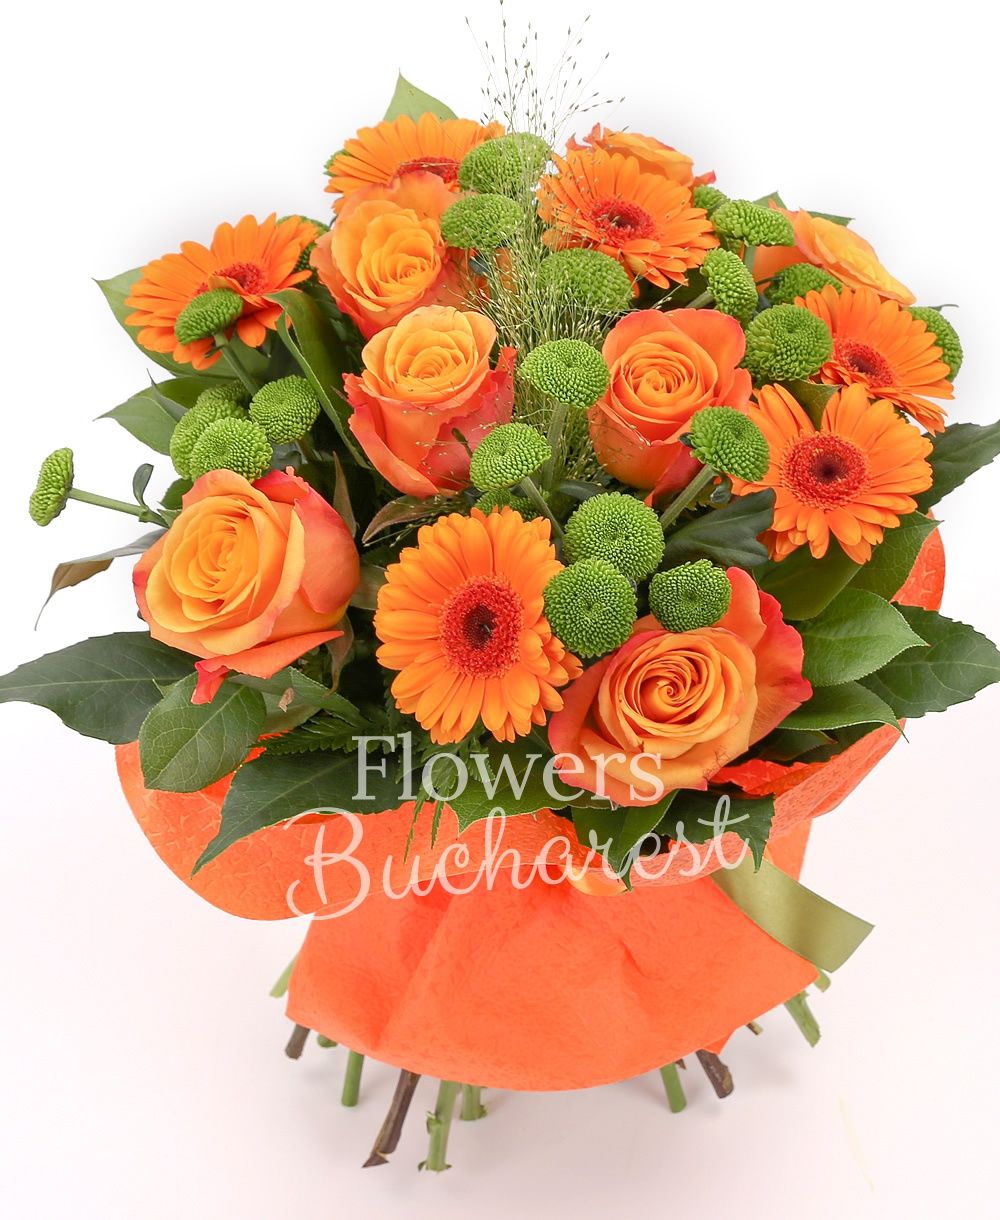 7 orange roses, 6 orange gerberas, 5 green solidago, greenery